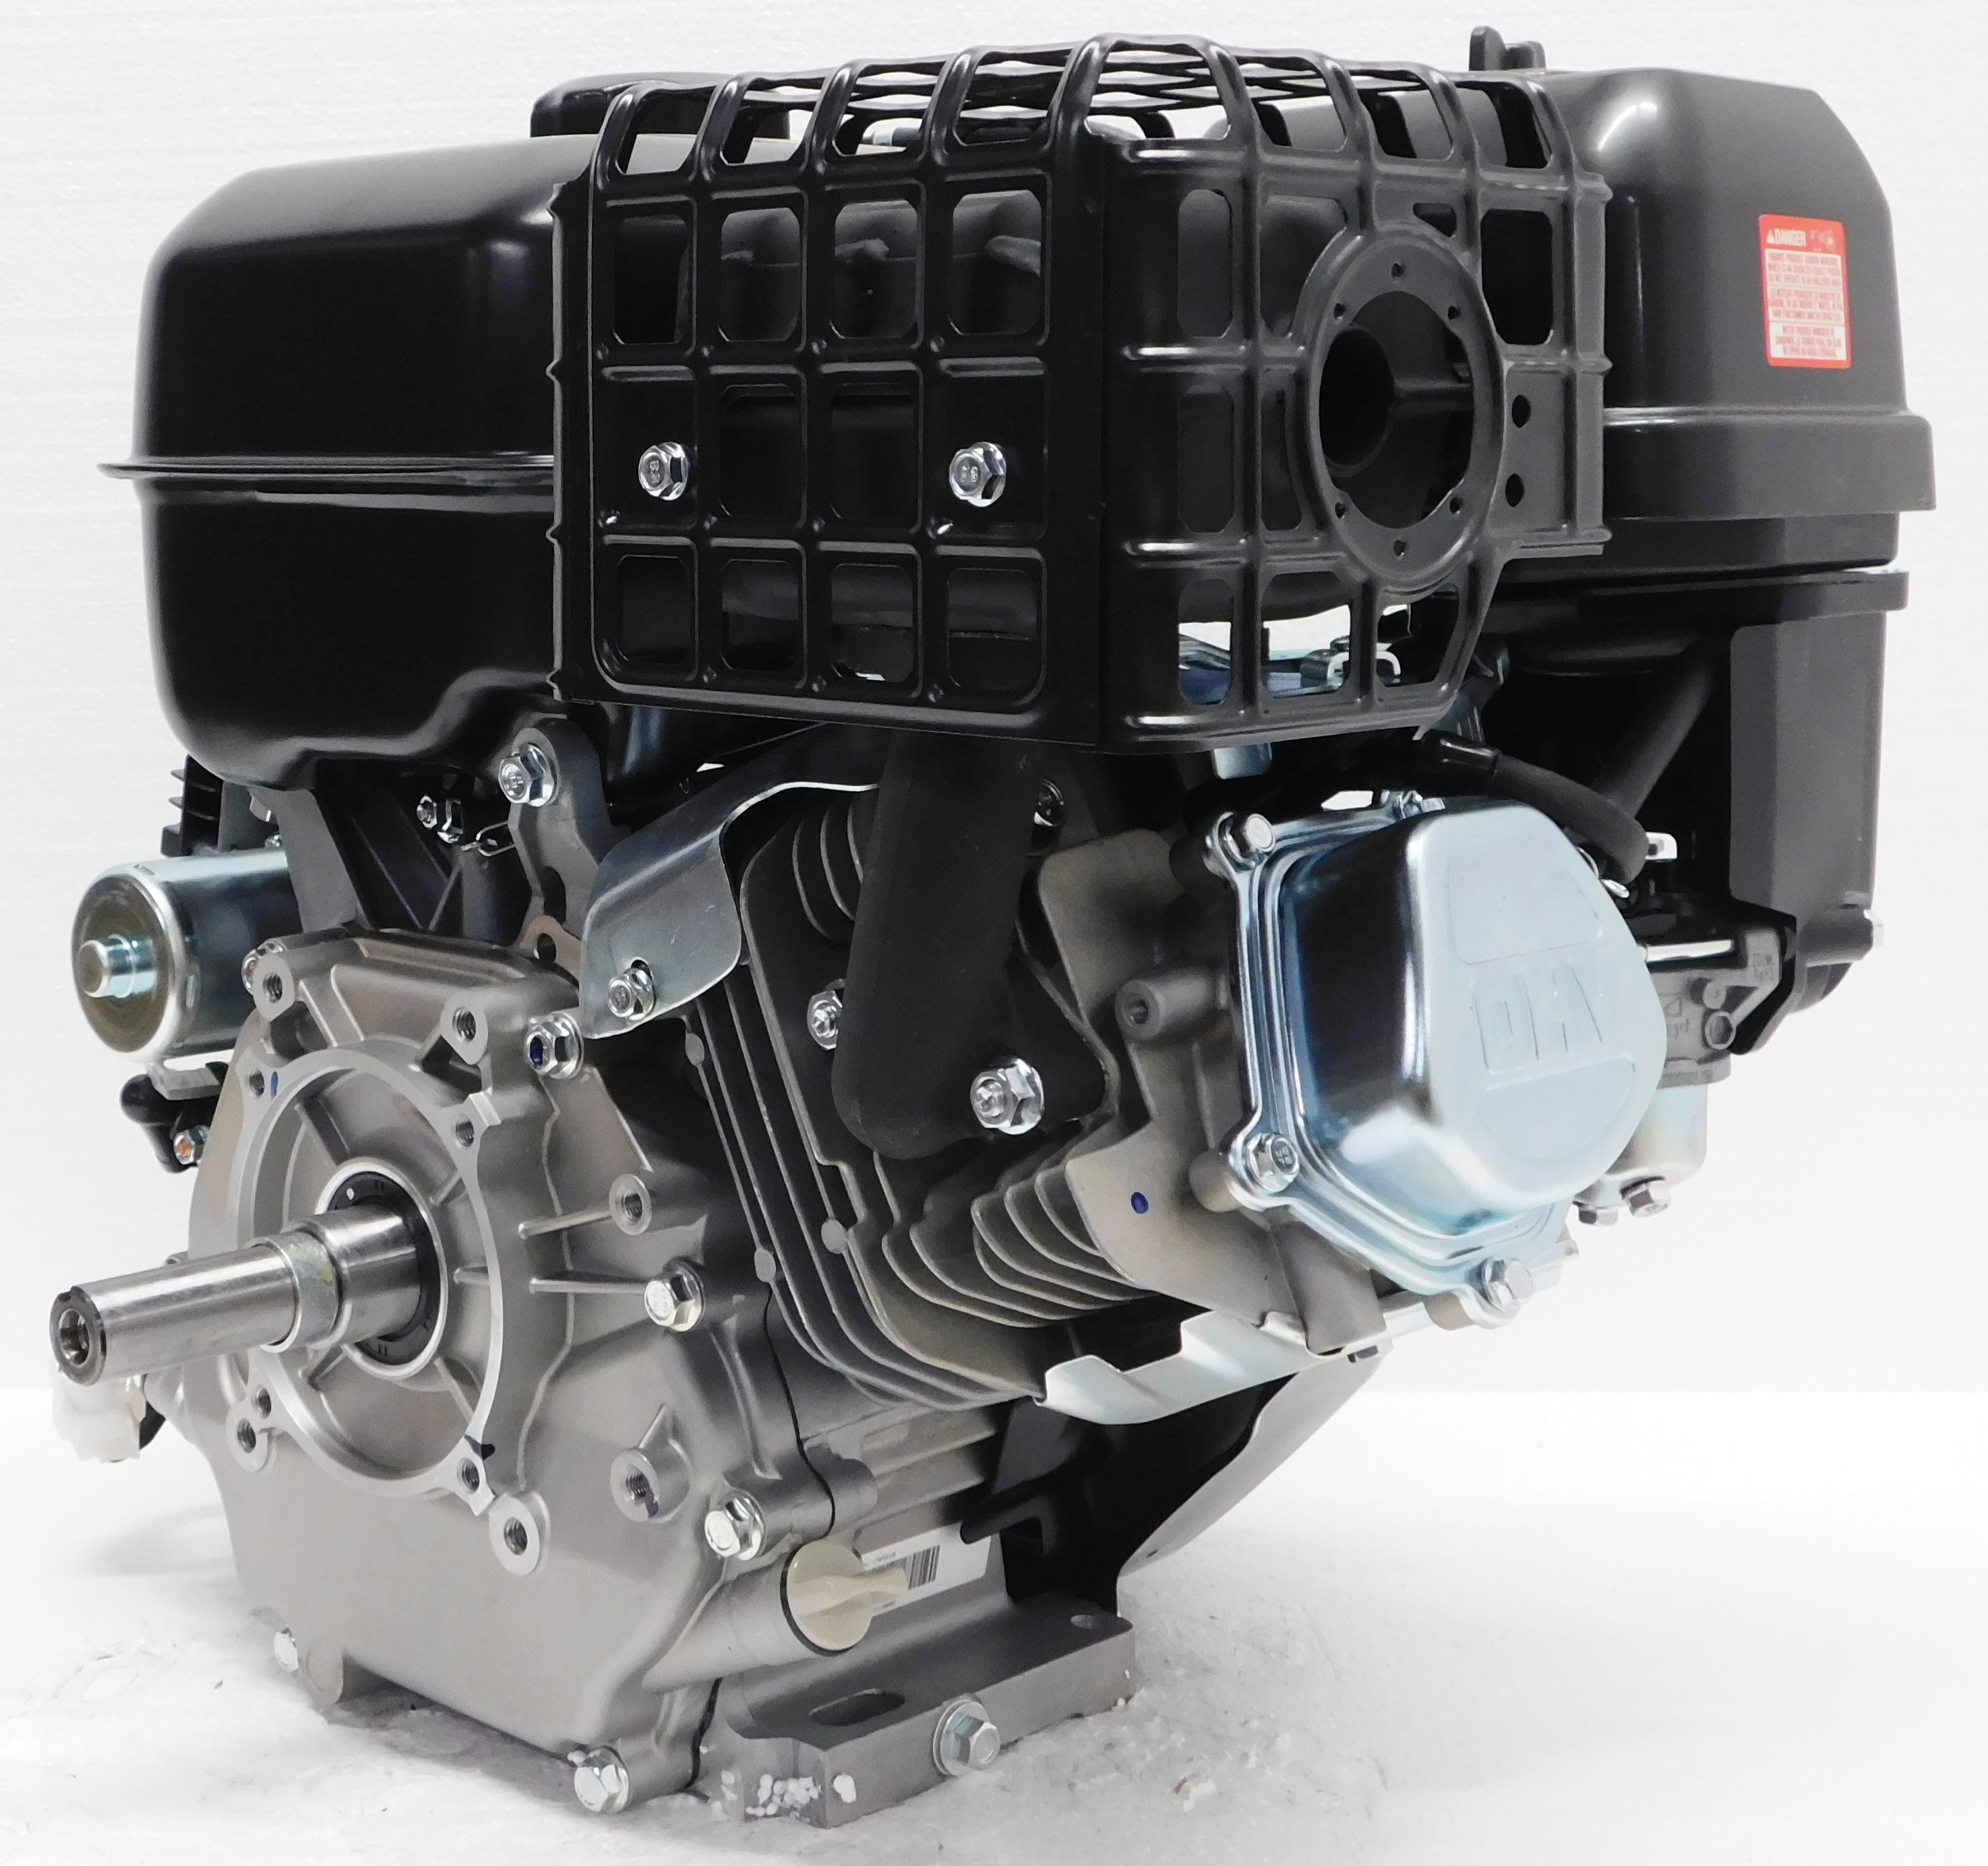 Simpson CRX420 420cc ES Horizontal Shaft Engine 1" x 3-1/2" #110054